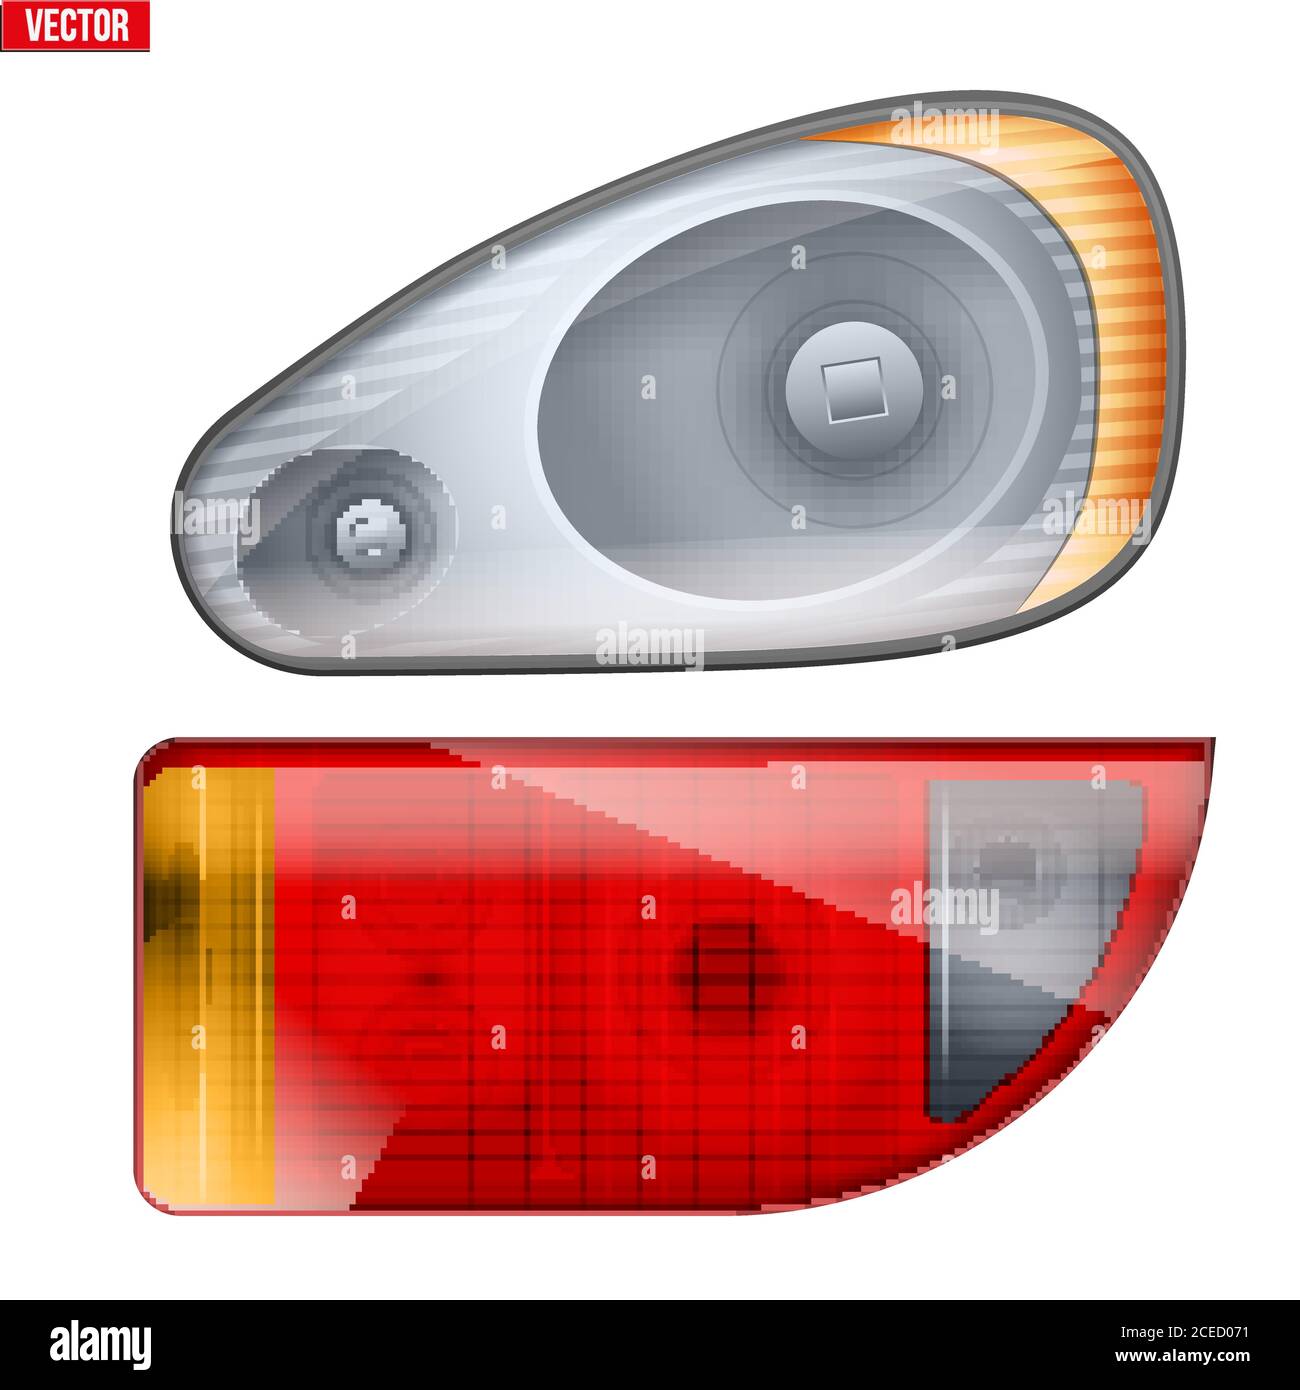 Rectangular car headlight and backlight Stock Vector